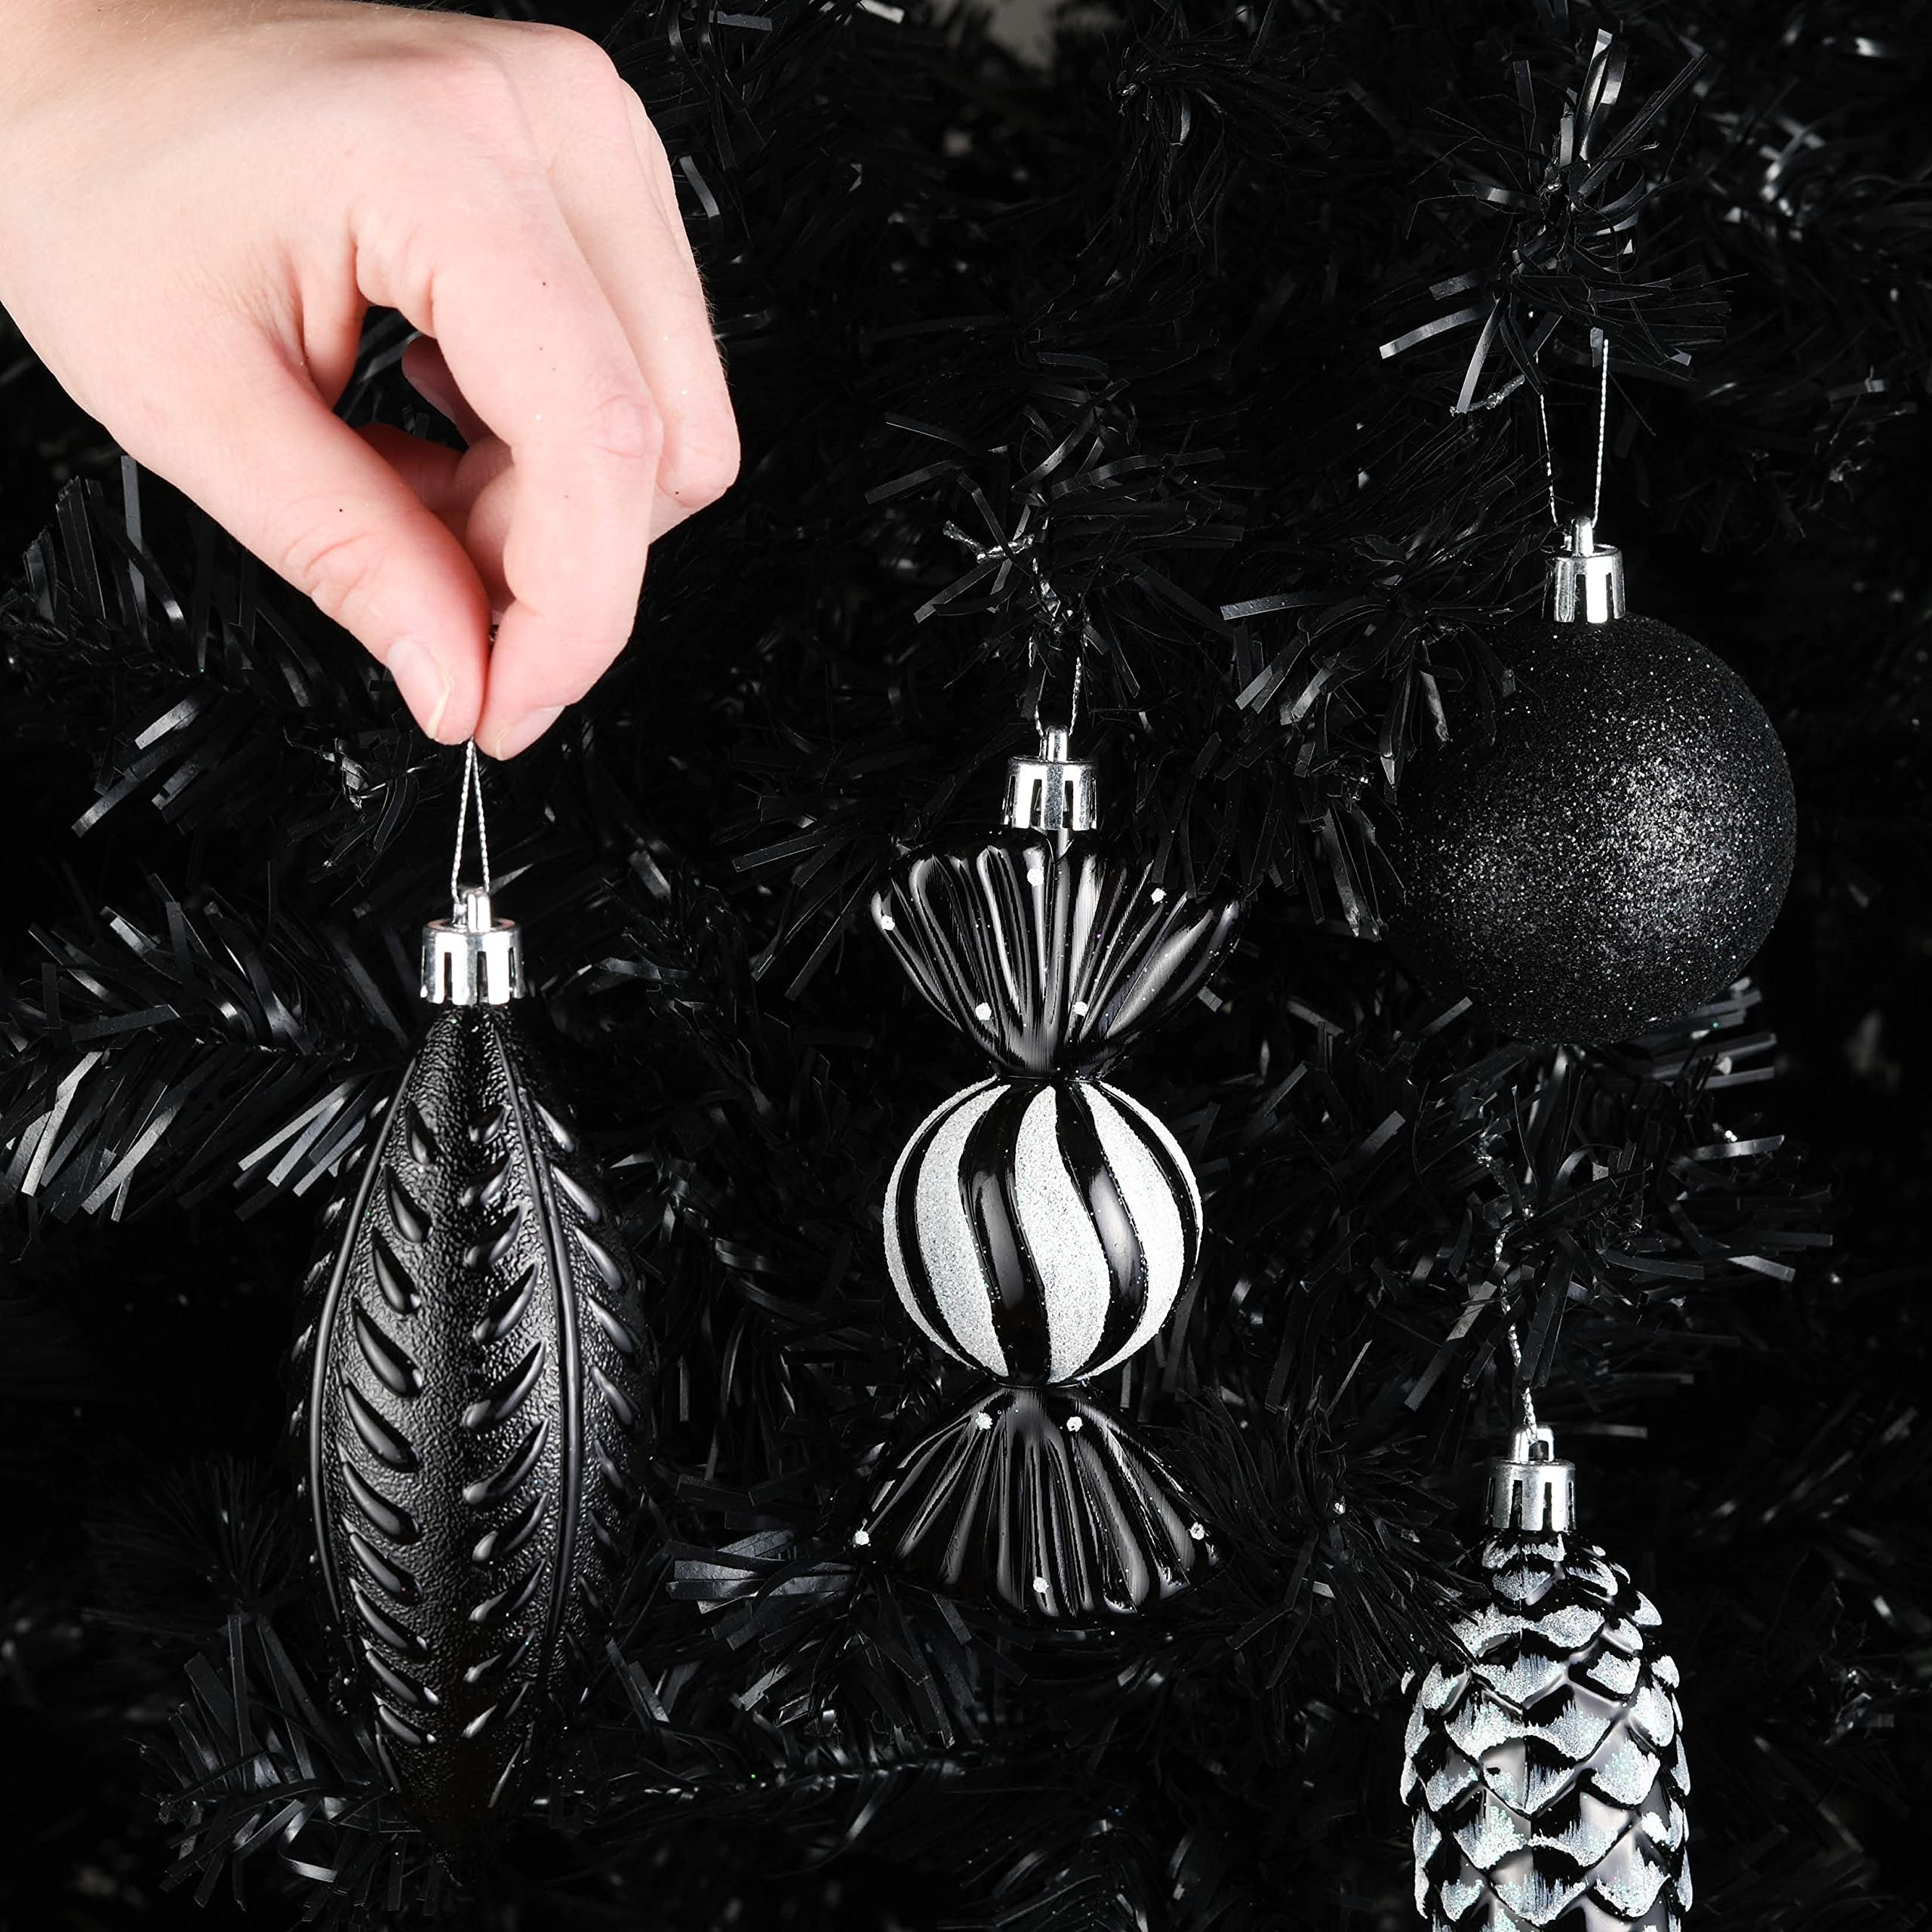 Prextex Christmas Tree Ornaments - Black Christmas Ball Ornaments Set for Christmas, Holiday, Wreath & Party Decorations (24 pcs - Small, Medium, Large) Shatterproof Black Christmas Ornaments